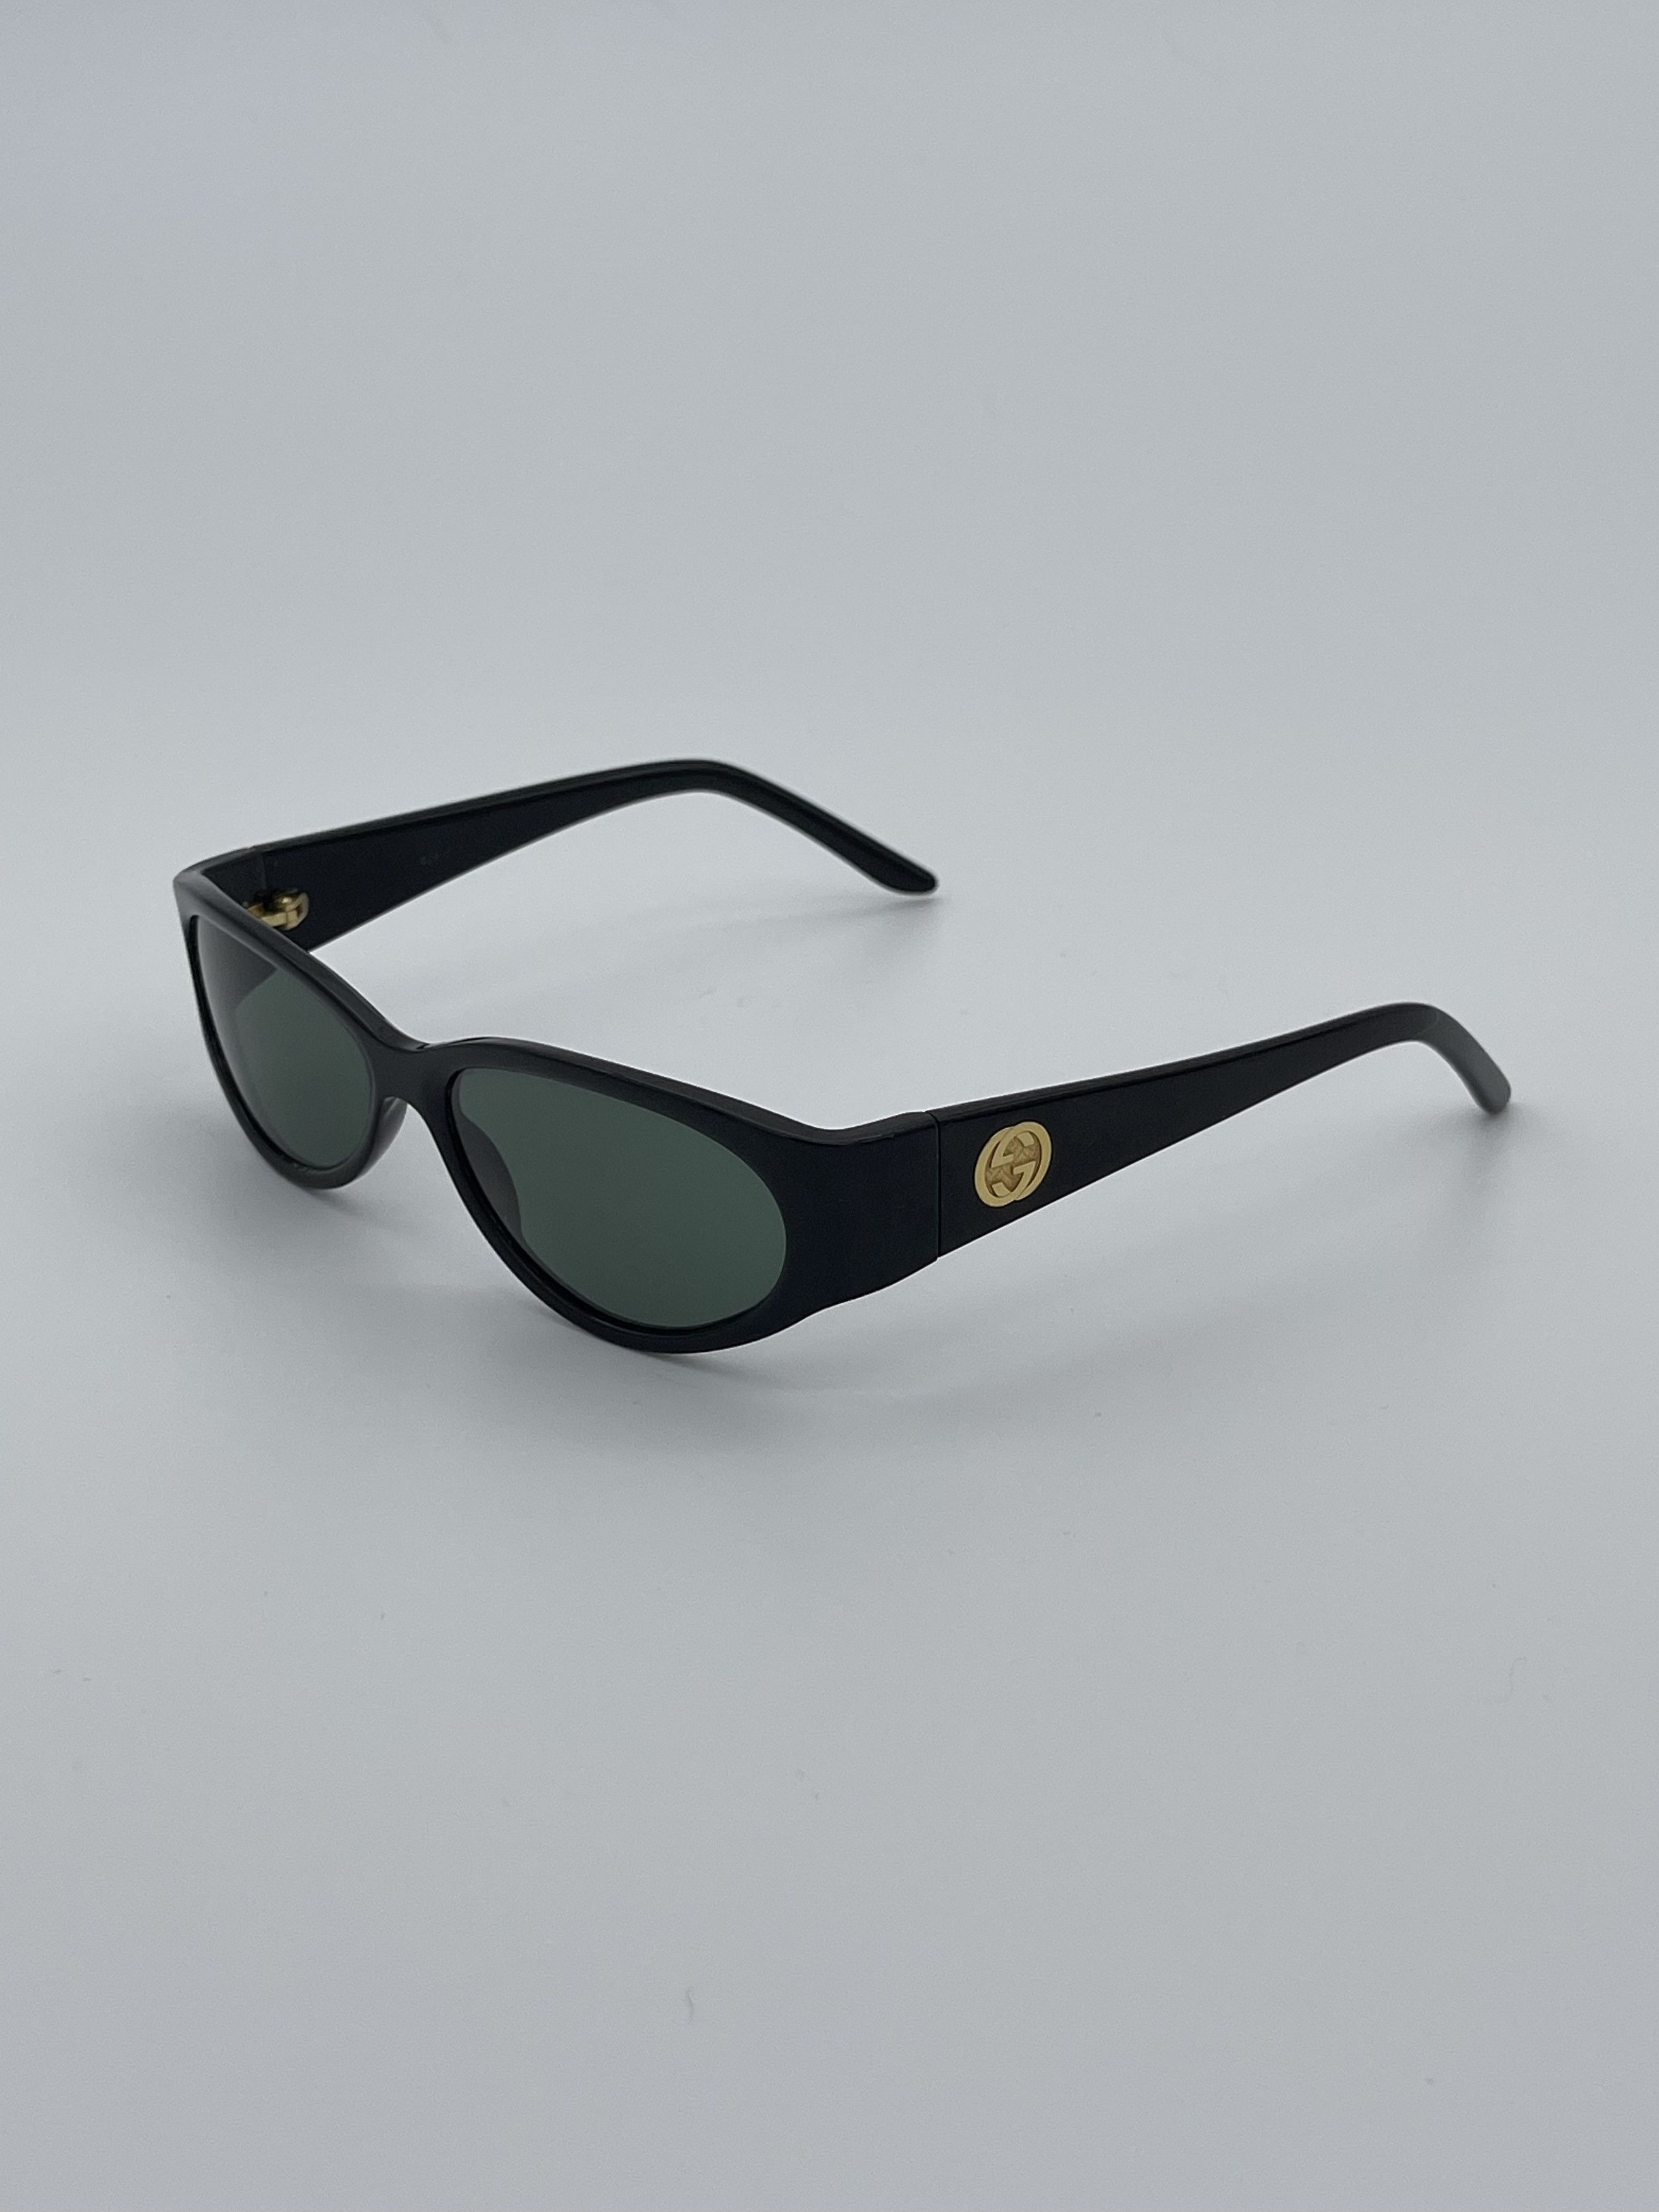 Gucci Rare Vintage Gucci Black Sunglasses Size ONE SIZE - 3 Thumbnail